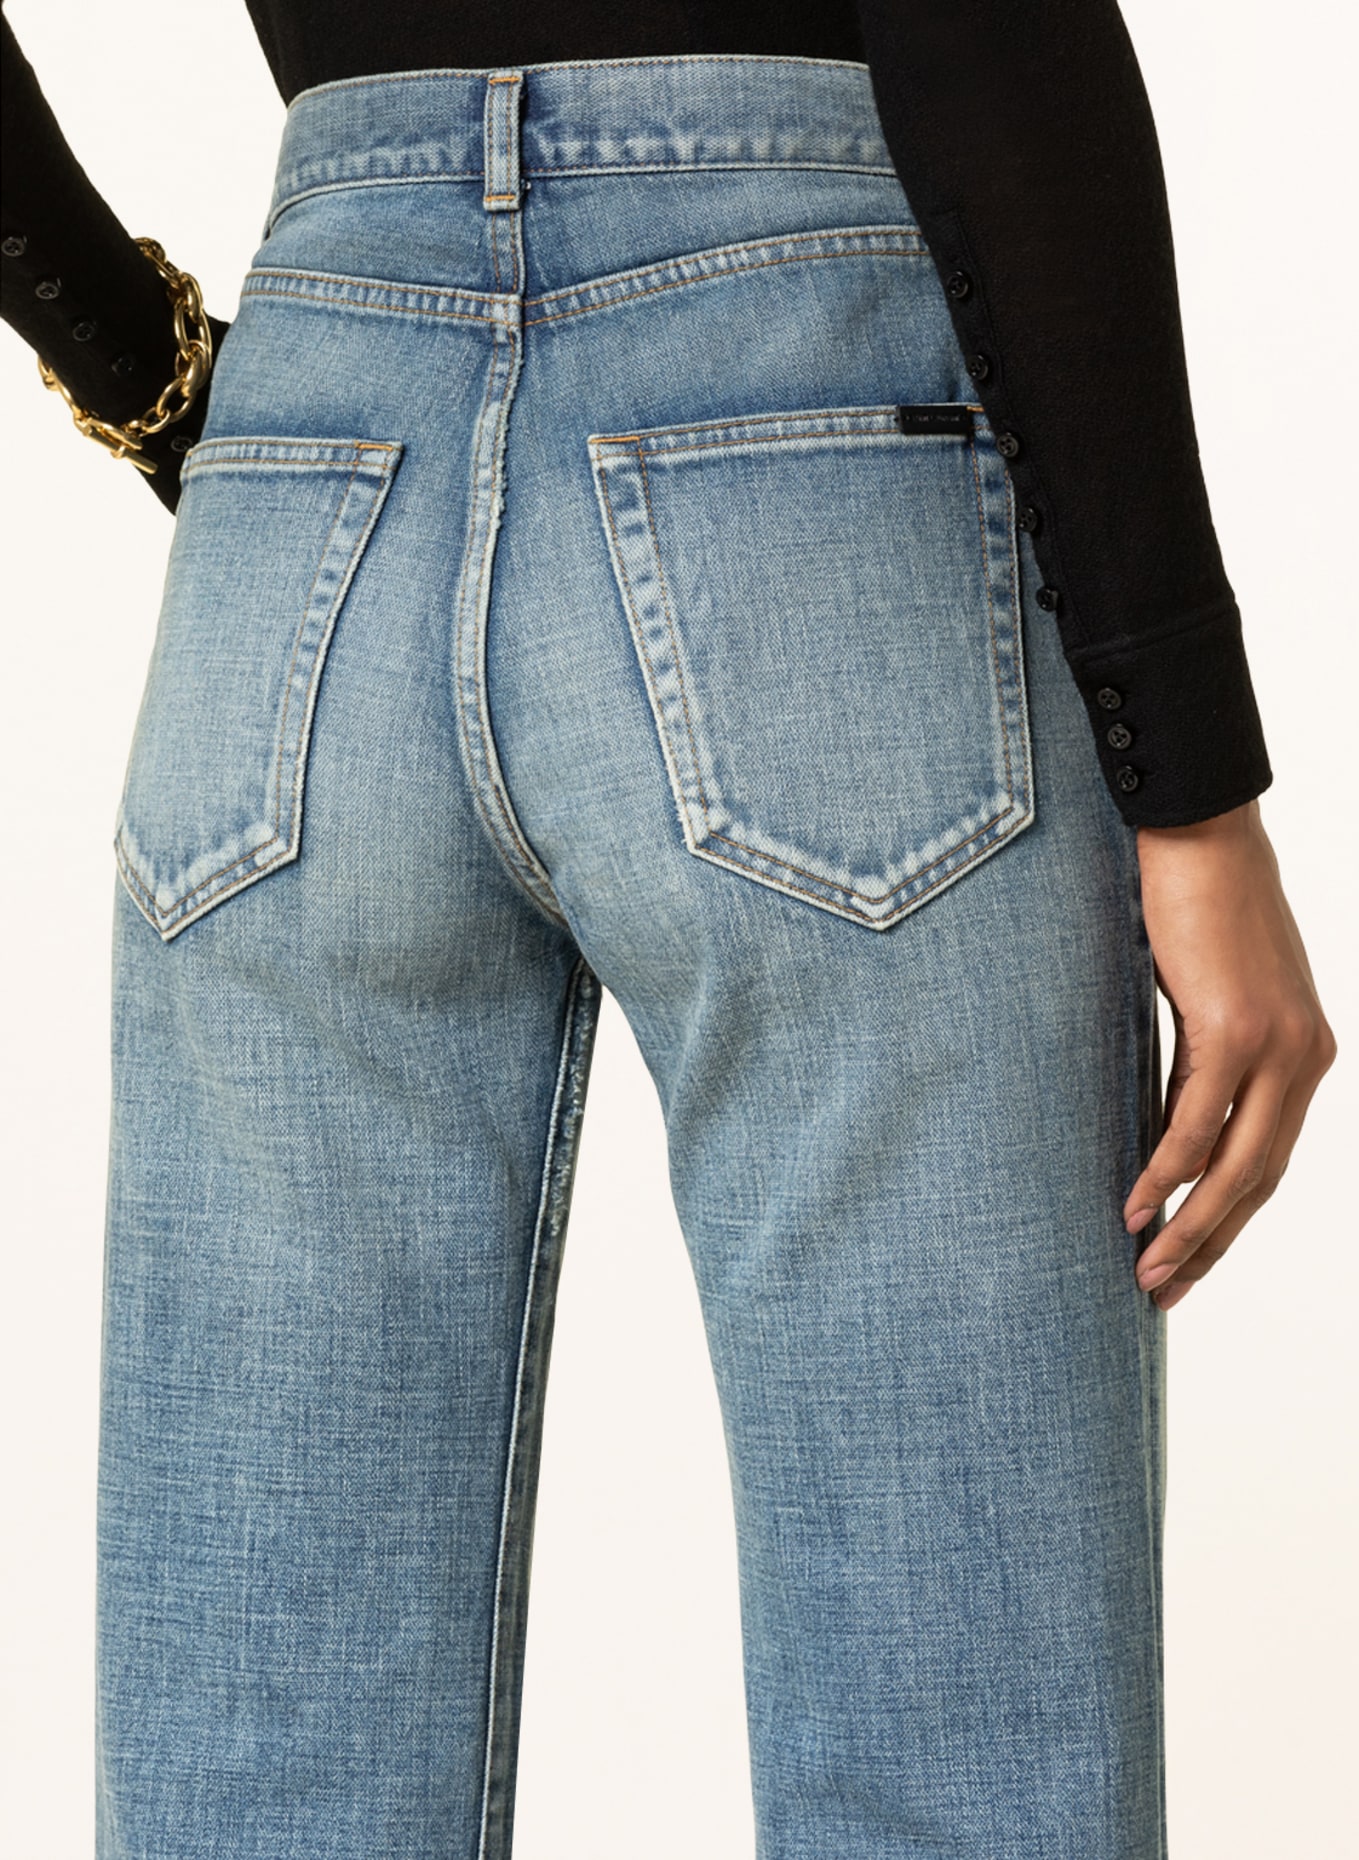 SAINT LAURENT Jeans JANE, Farbe: 4126 70'S SERGE BLUE (Bild 5)